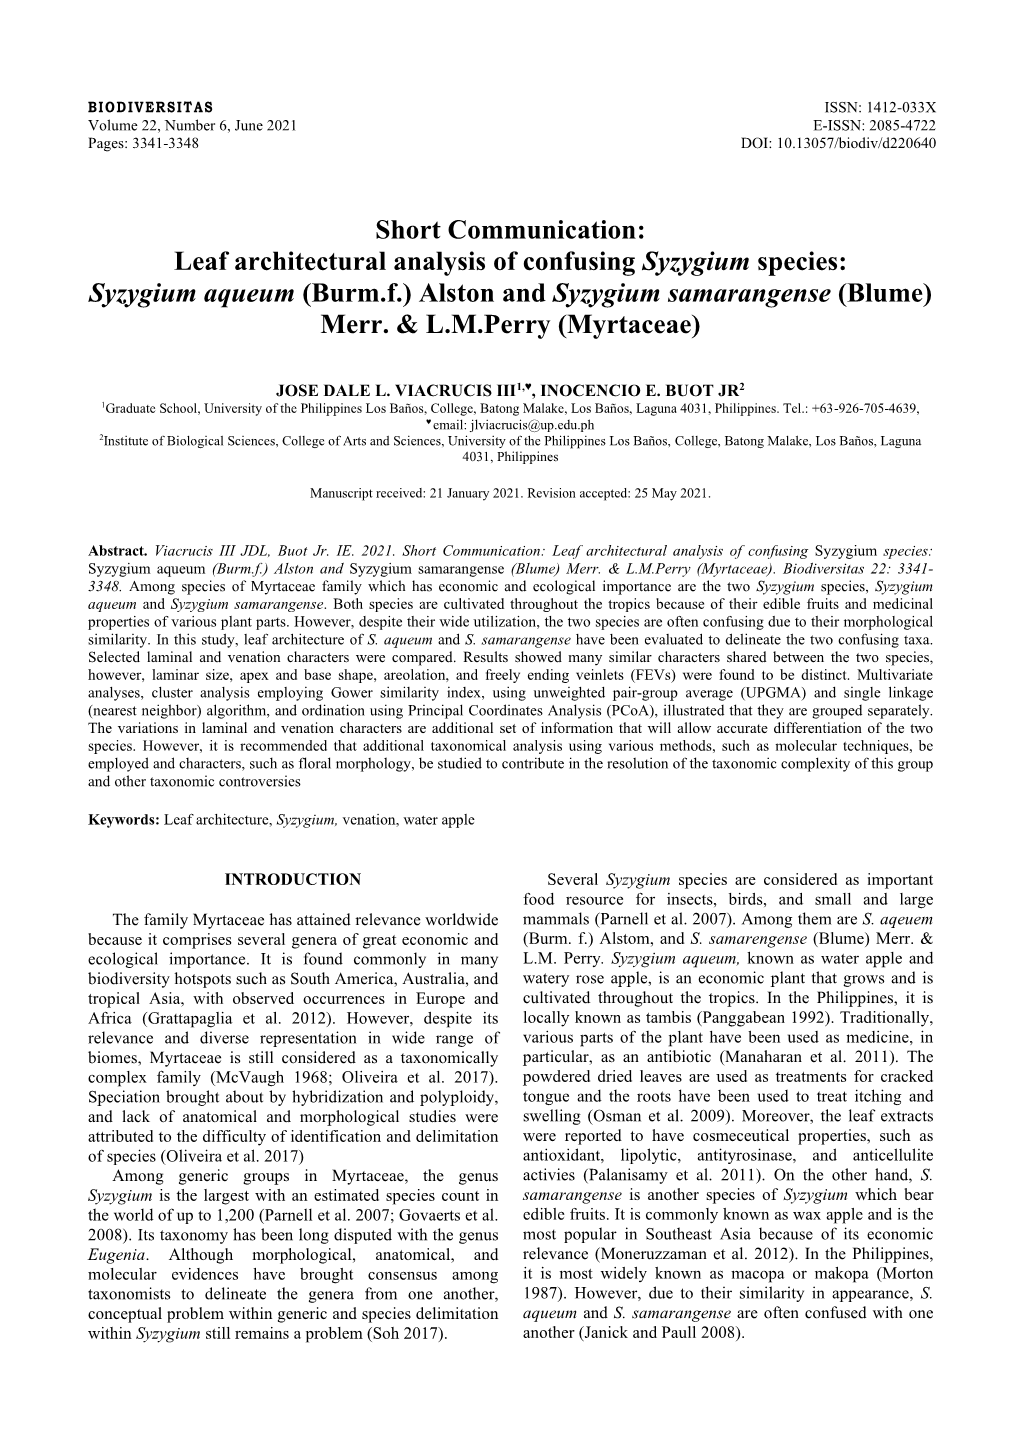 Leaf Architectural Analysis of Confusing Syzygium Species: Syzygium Aqueum (Burm.F.) Alston and Syzygium Samarangense (Blume) Merr